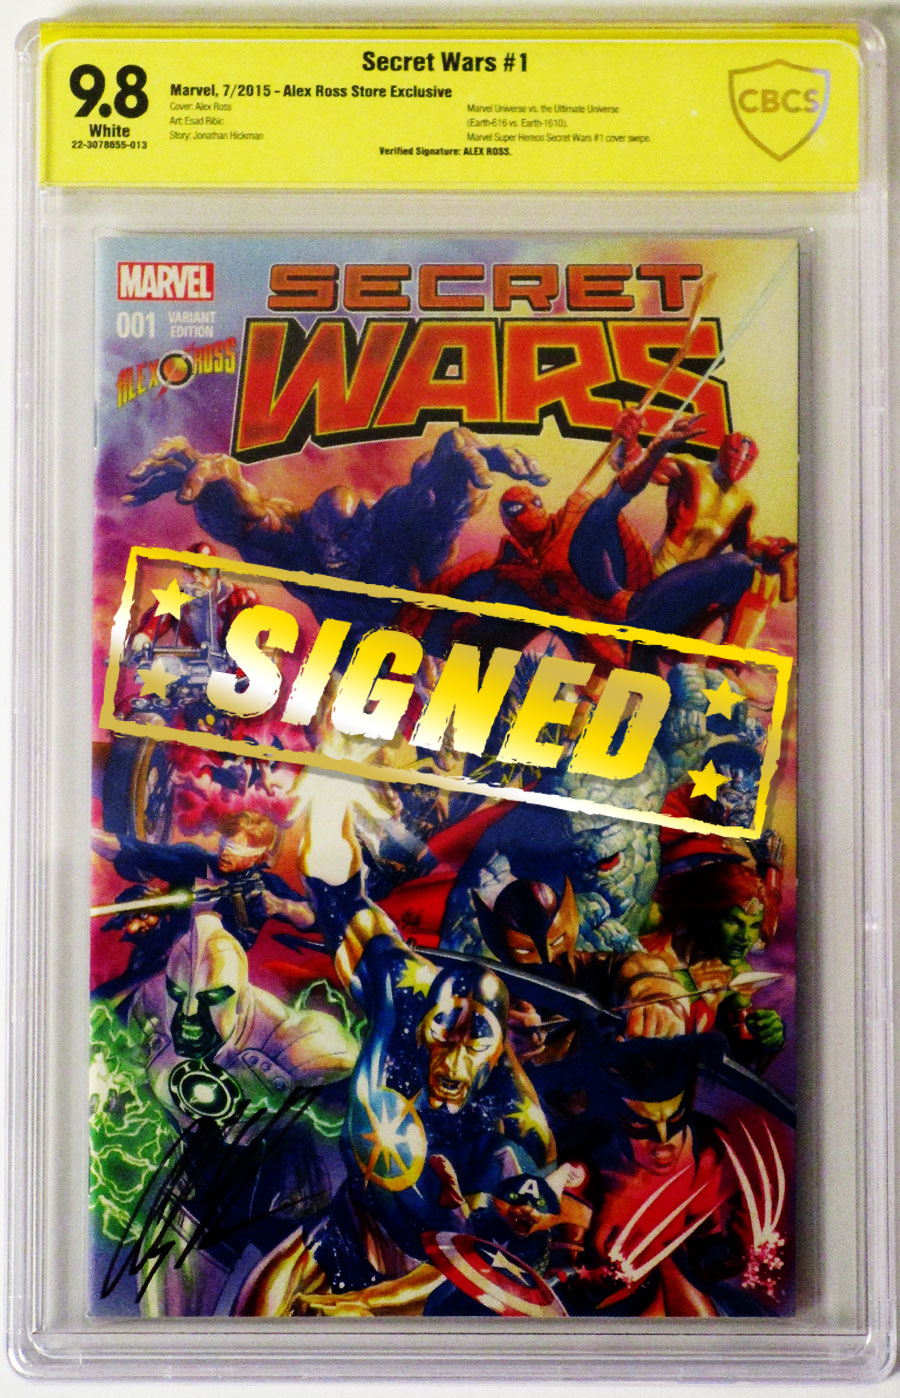 Secret Wars #1 Cover Z-S Alex Ross Store Exclusive Variant Signed by Alex Ross CBCS 9.8